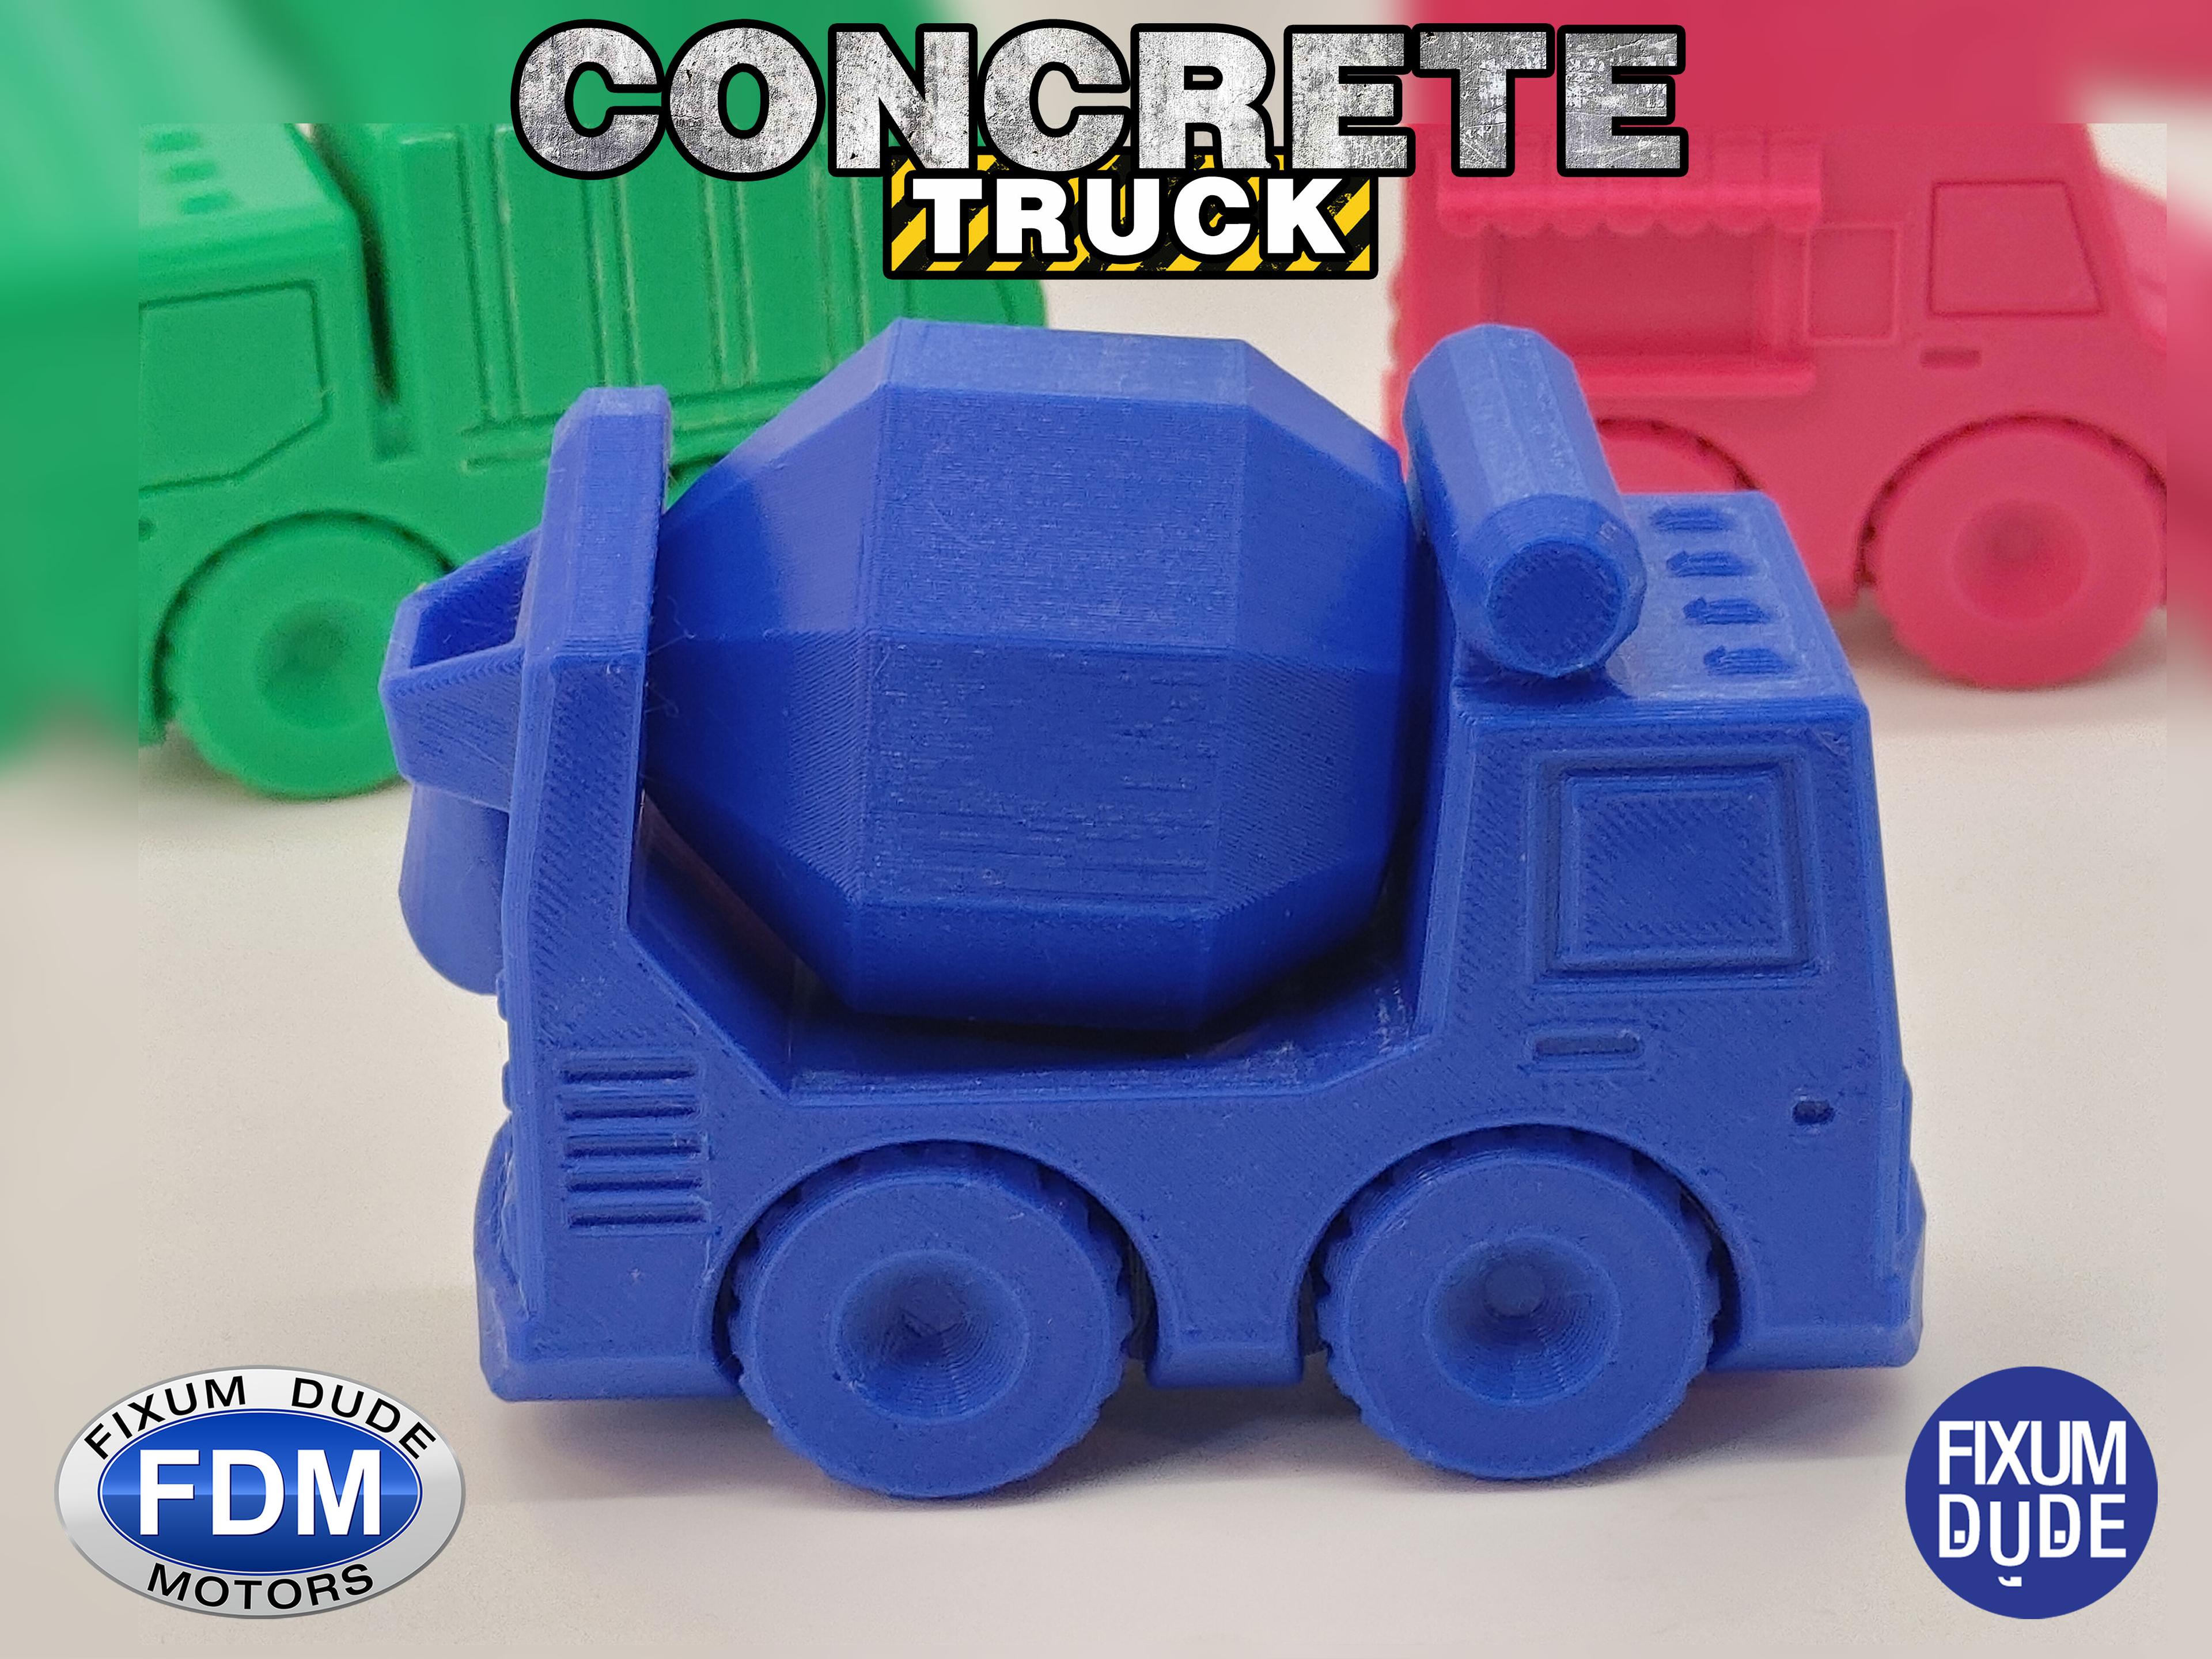 Fixum Dude Motors PiP Concrete Truck 3d model